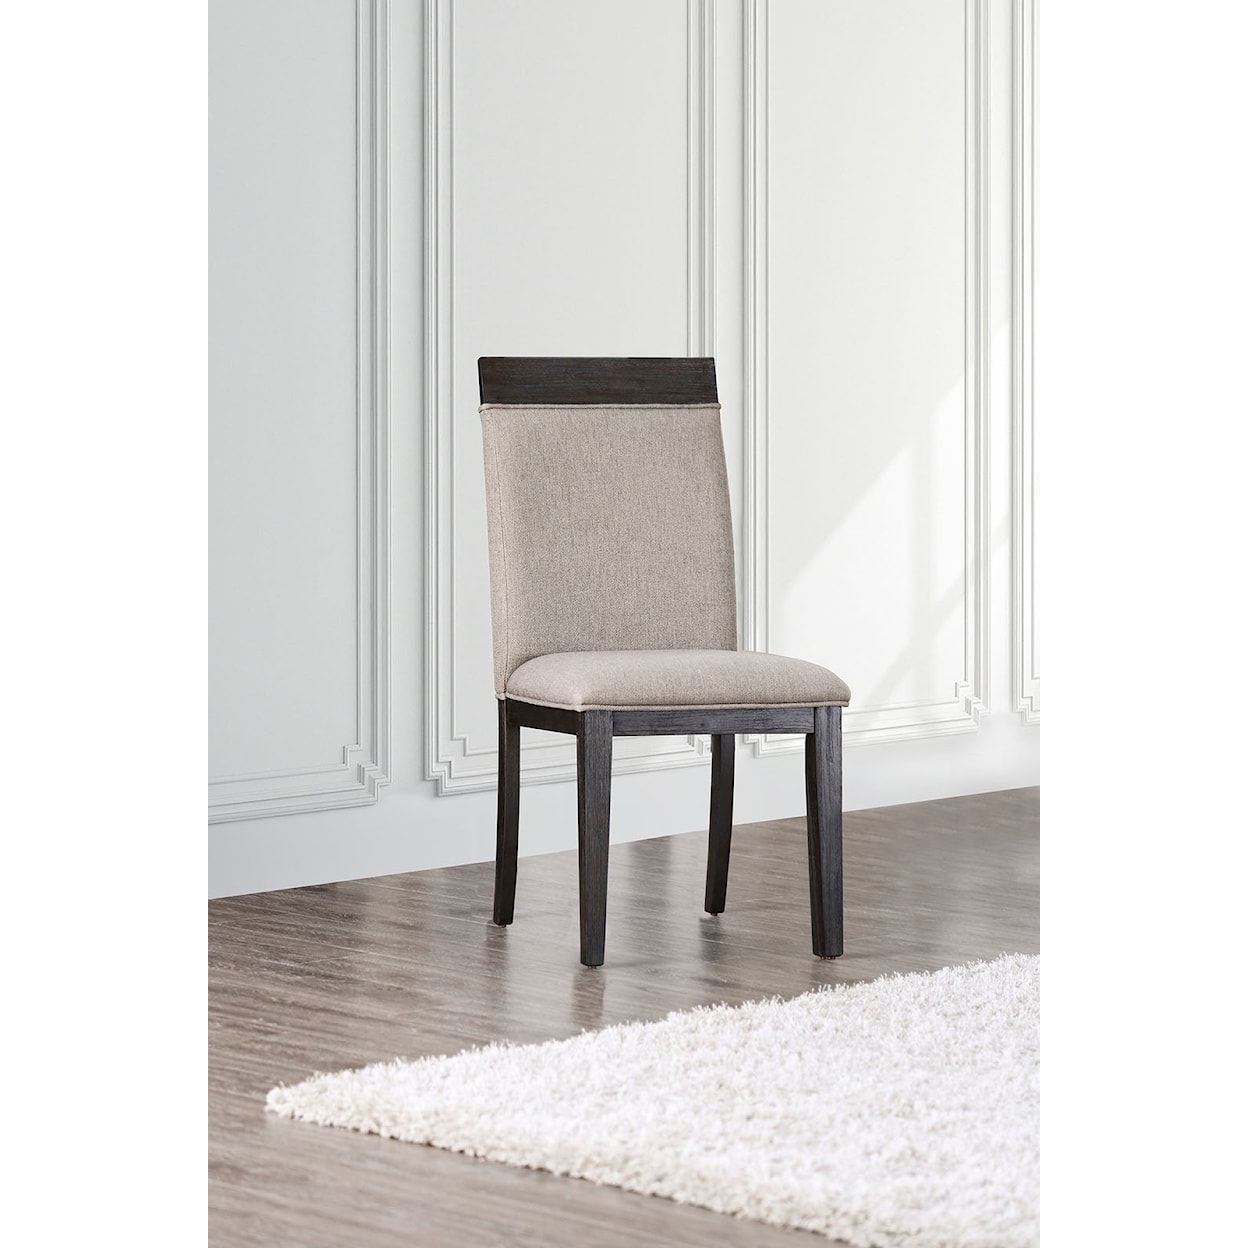 FUSA Modoc 2-Piece Side Chair Set